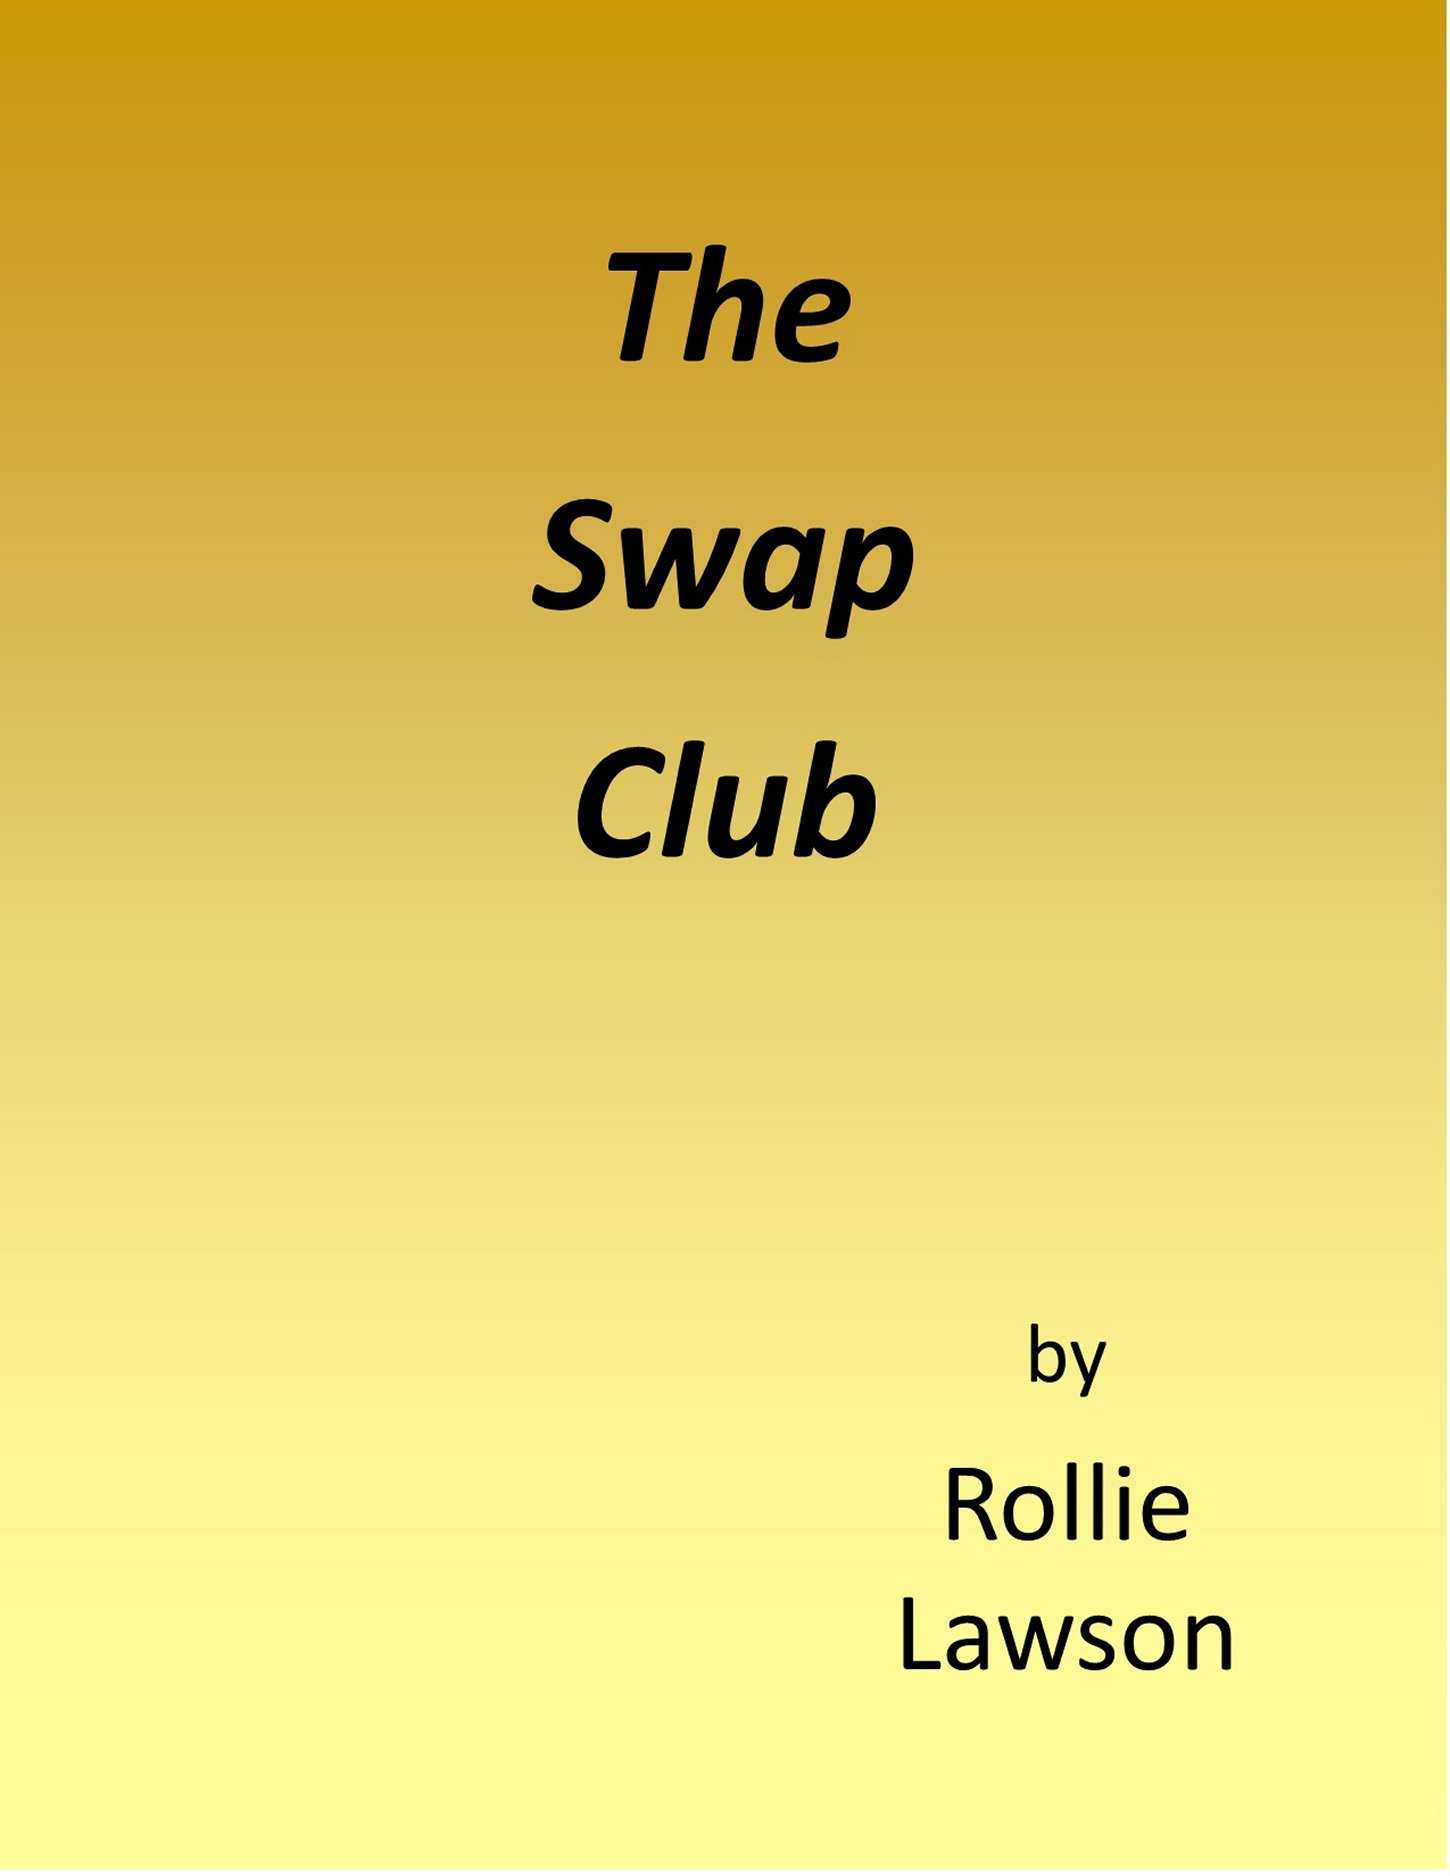 The Swap Club pic